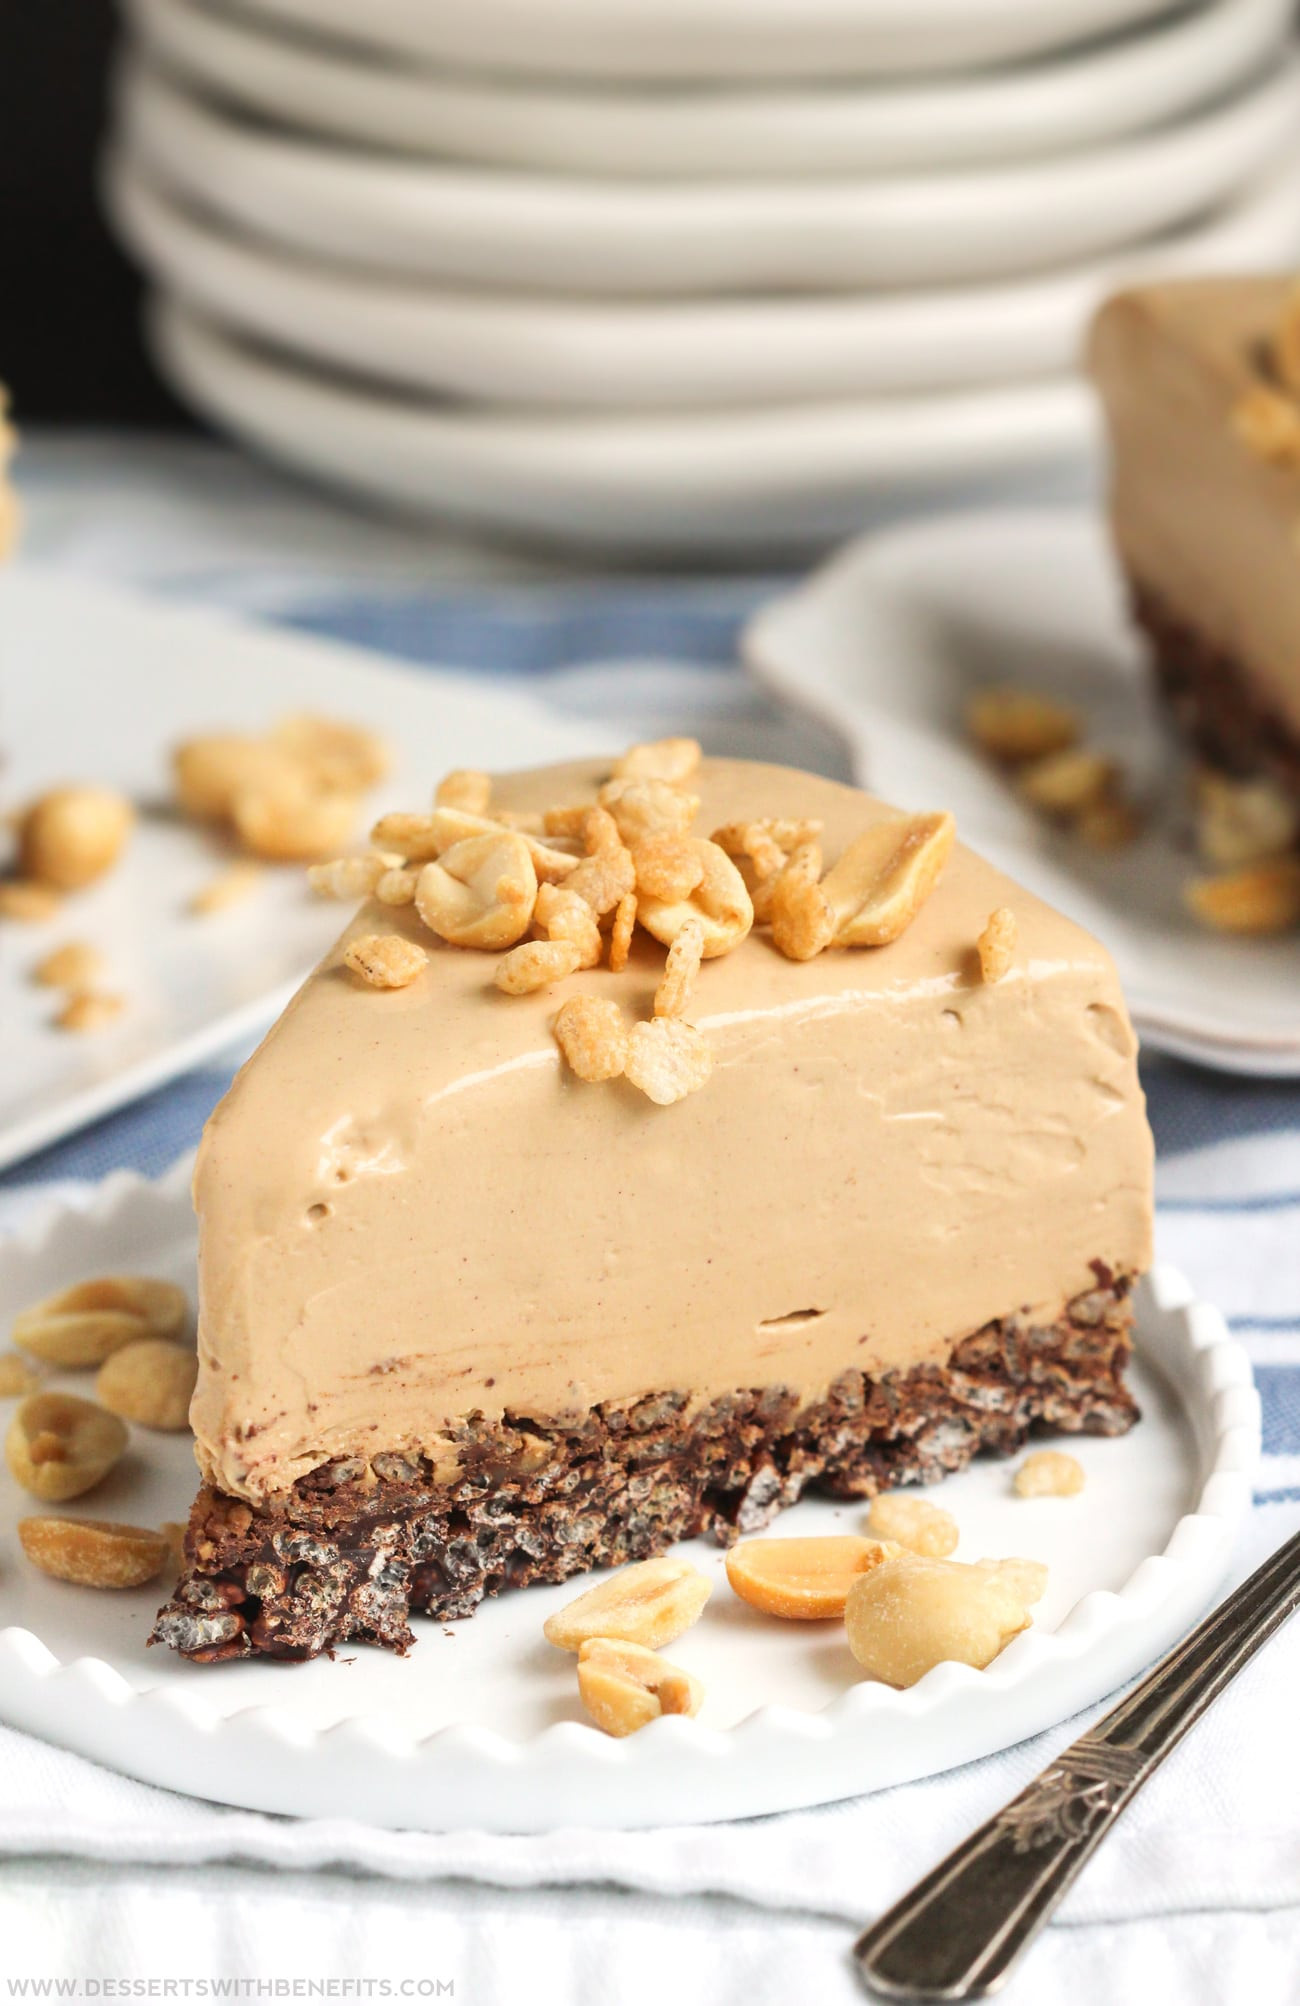 Healthy Peanut Butter Dessert Recipes
 Healthy Peanut Butter Chocolate Crunch Pie